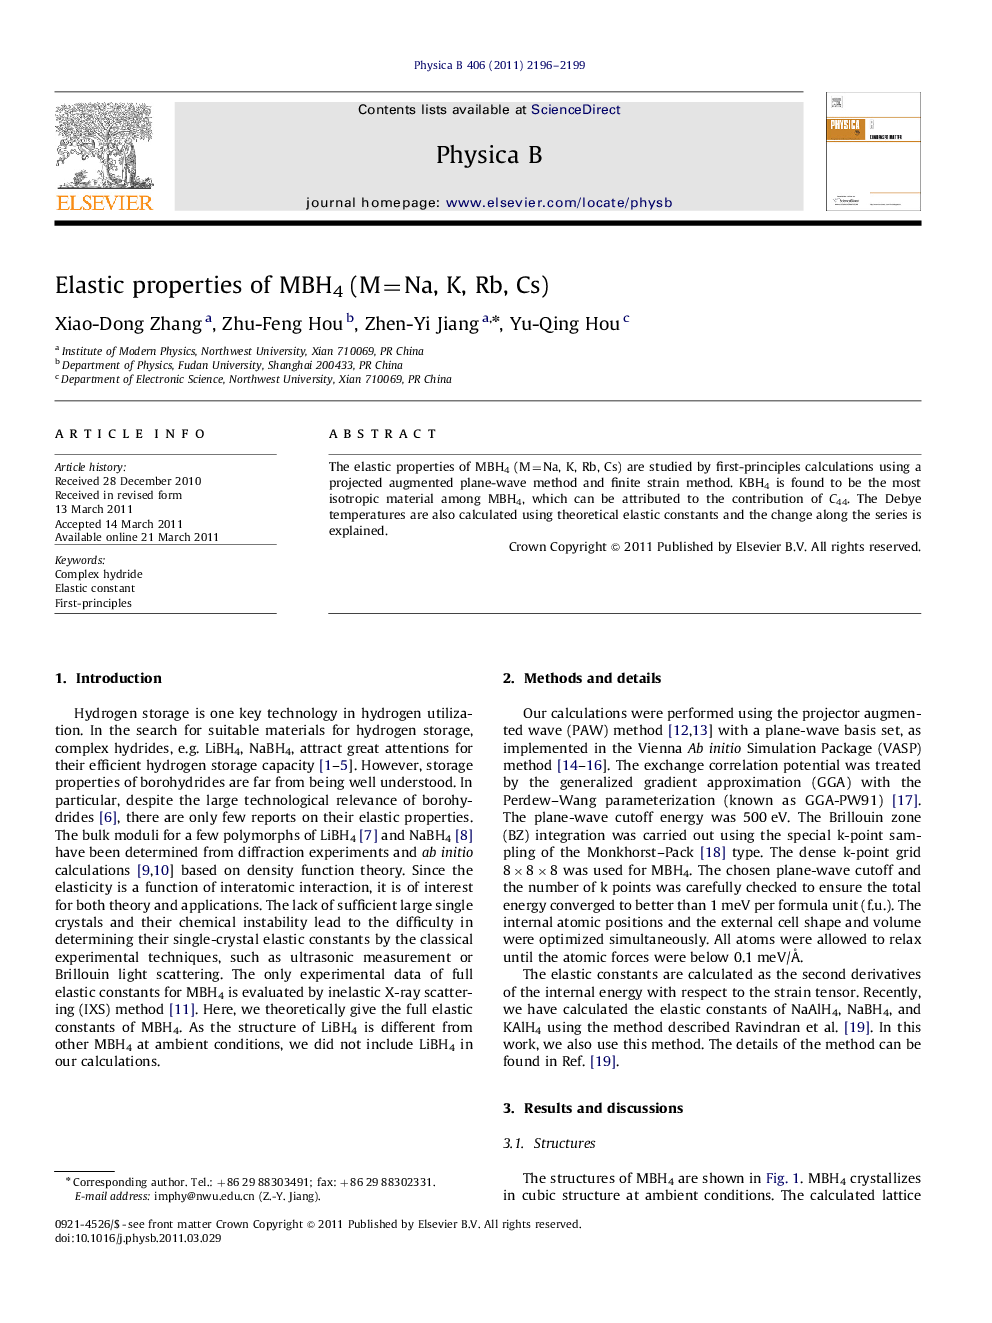 Elastic properties of MBH4 (M=Na, K, Rb, Cs)